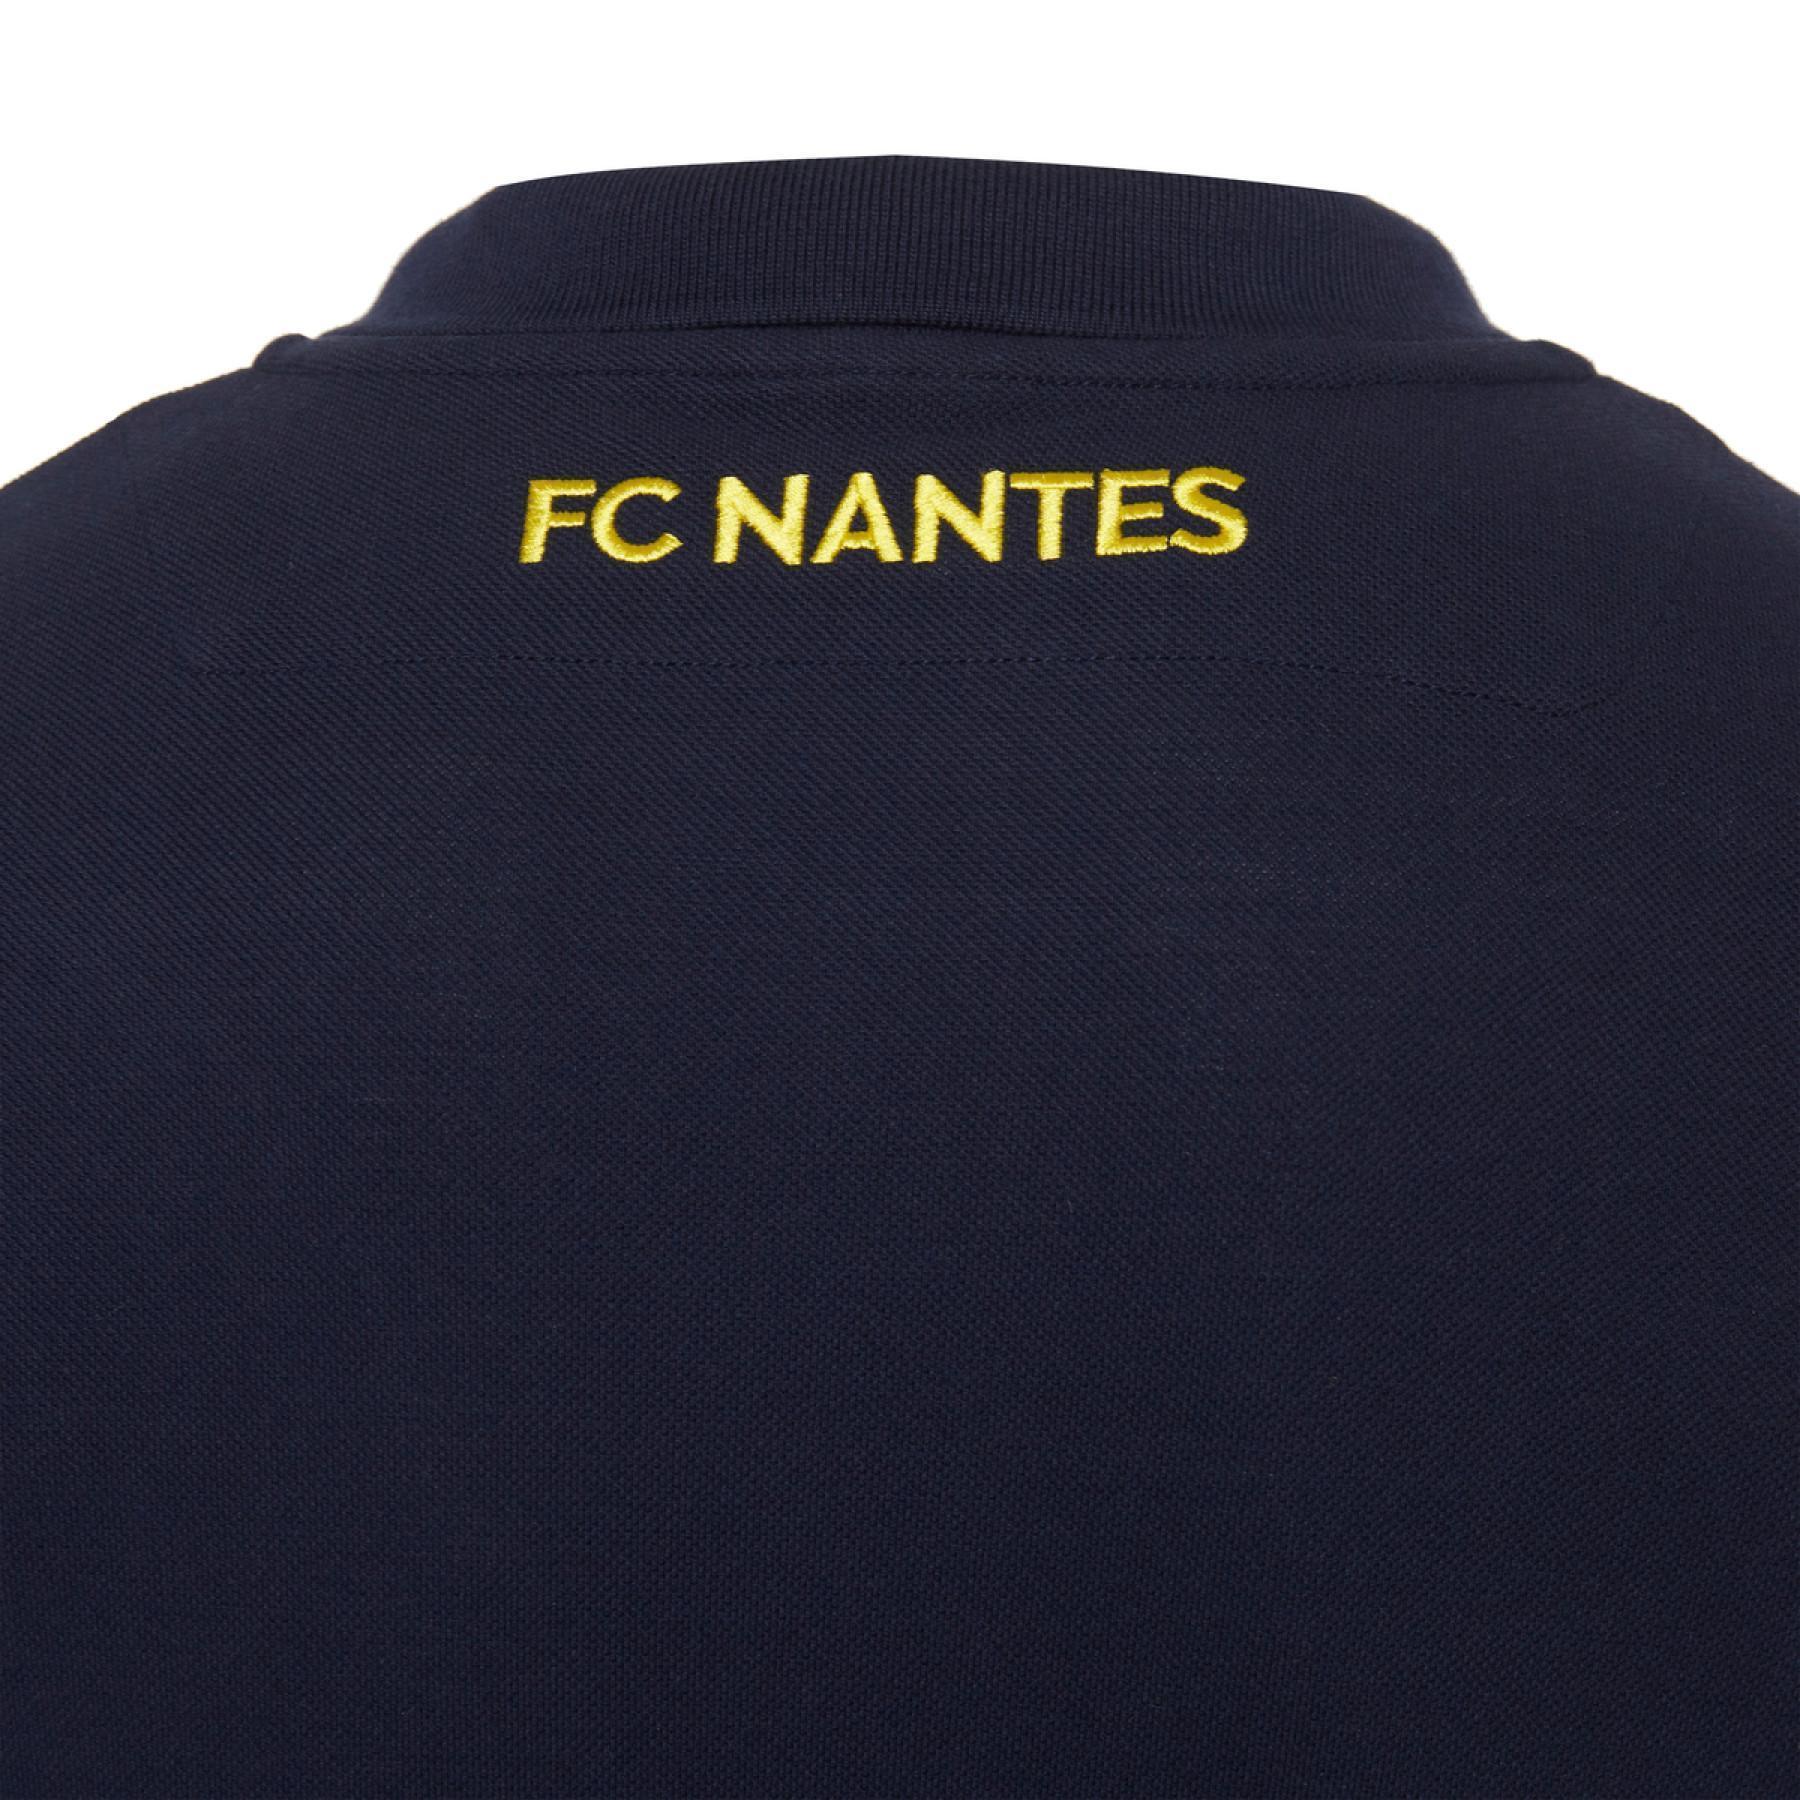 Polospeler FC Nantes 2020/21